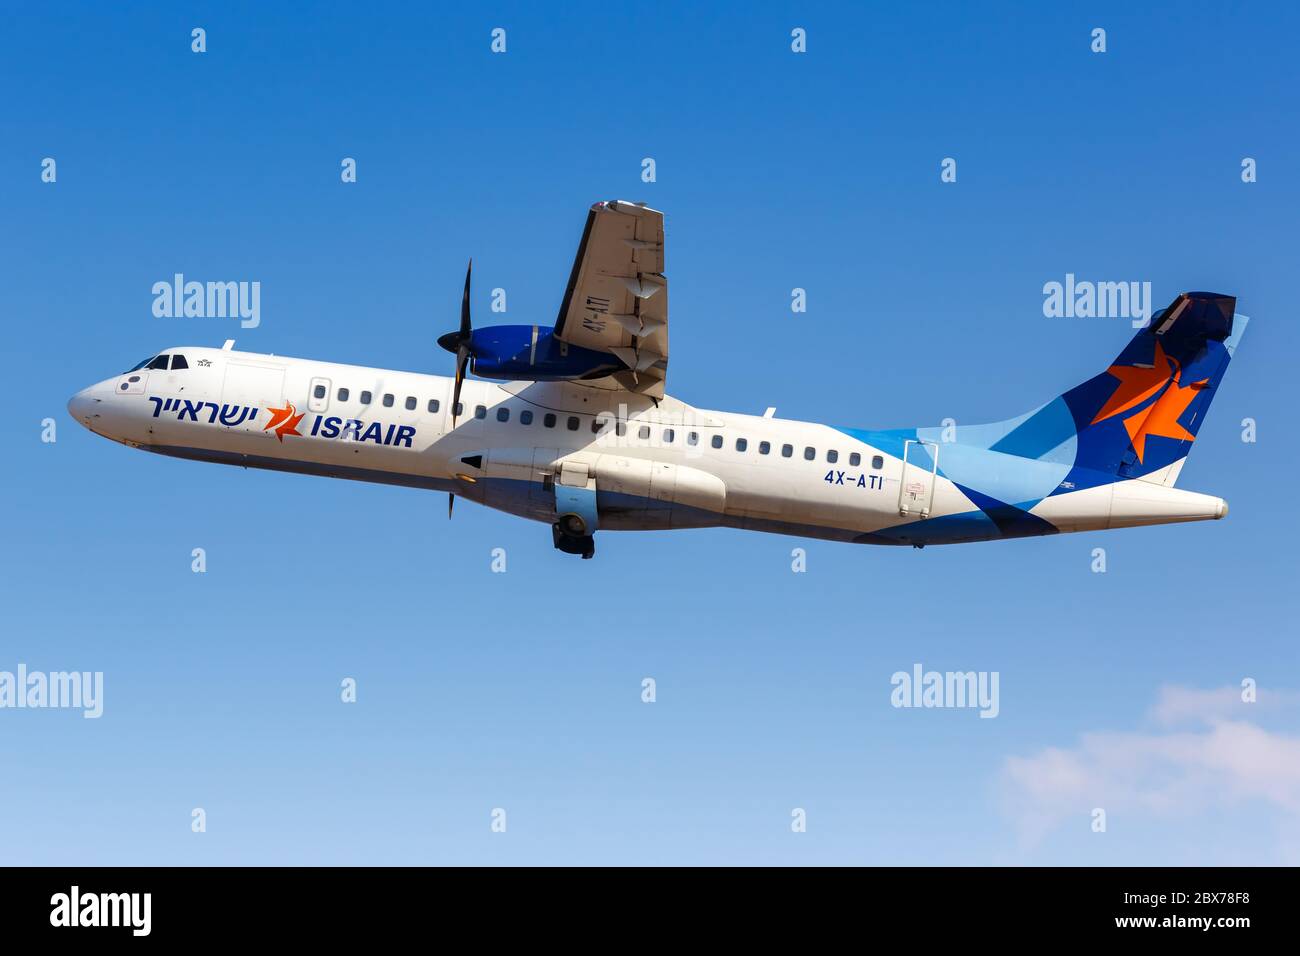 Eilat, Israël - 21 février 2019 : avion Israël ATR 72 à l'aéroport Eilat (ETH) en Israël. Banque D'Images